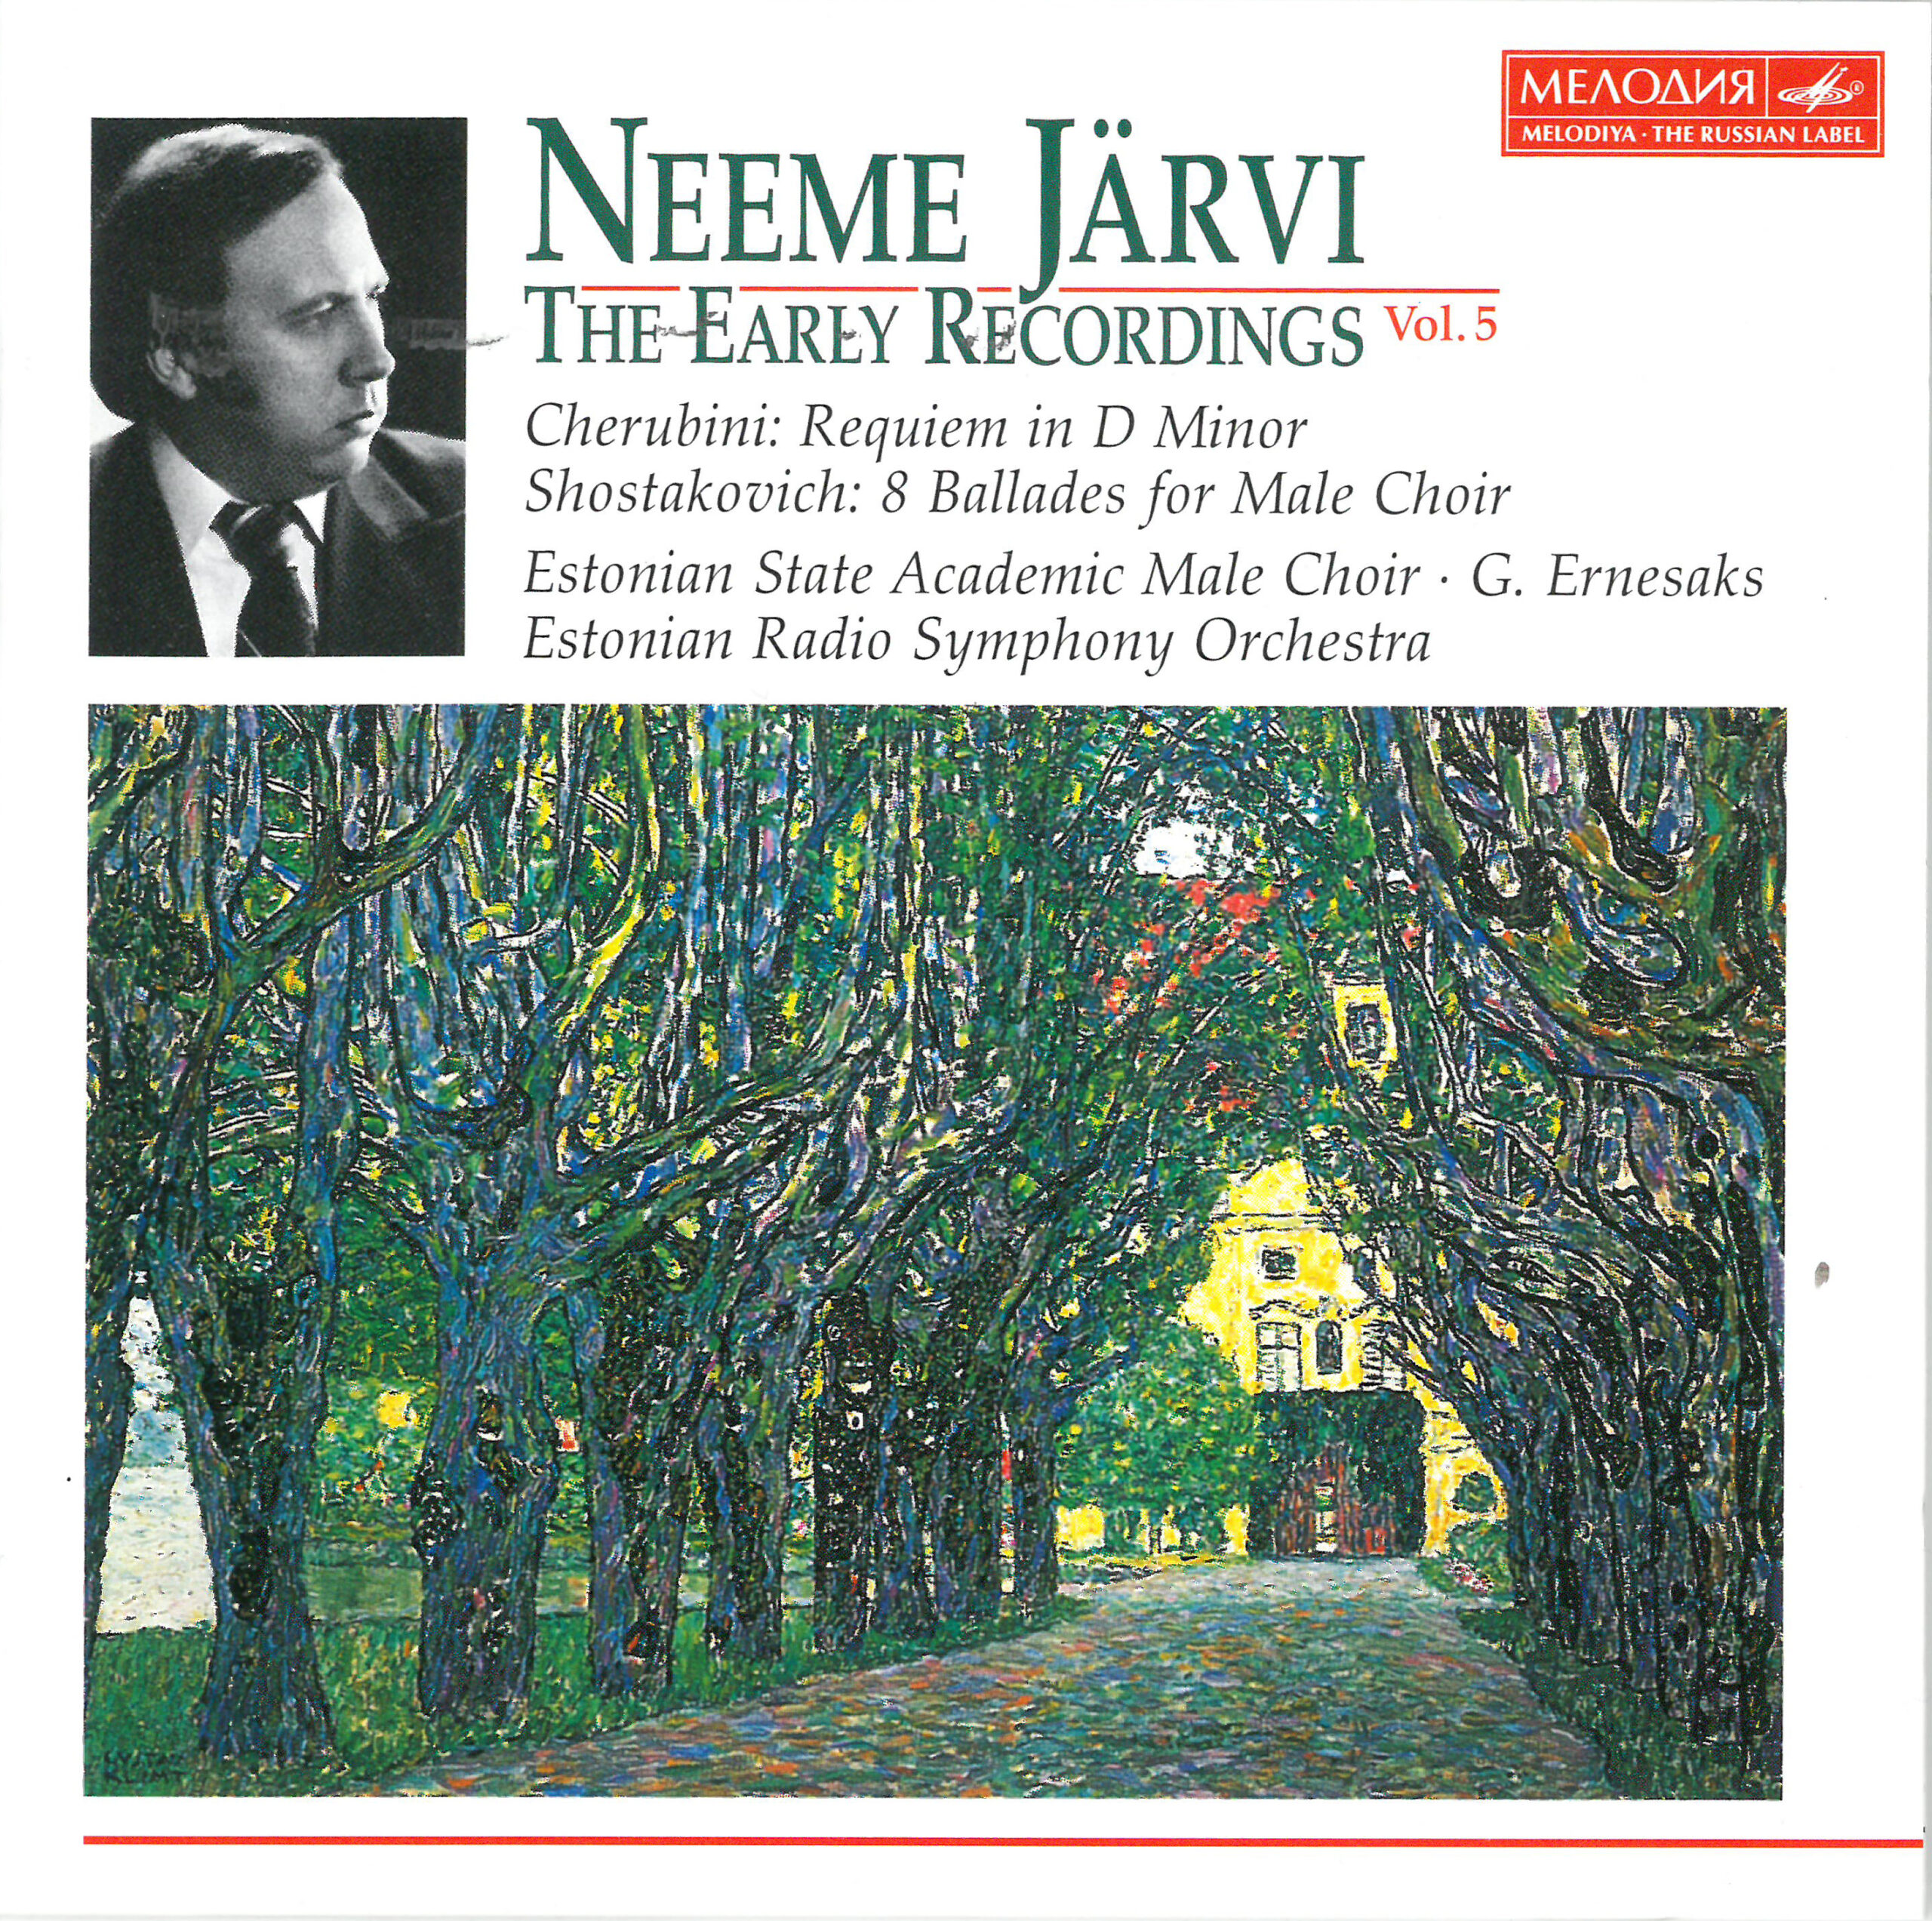 NEEME JÄRVI. THE EARLY RECORDINGS Vol. 5. Neeme Järvi, Gustav Ernesaks. Melodiya 1997